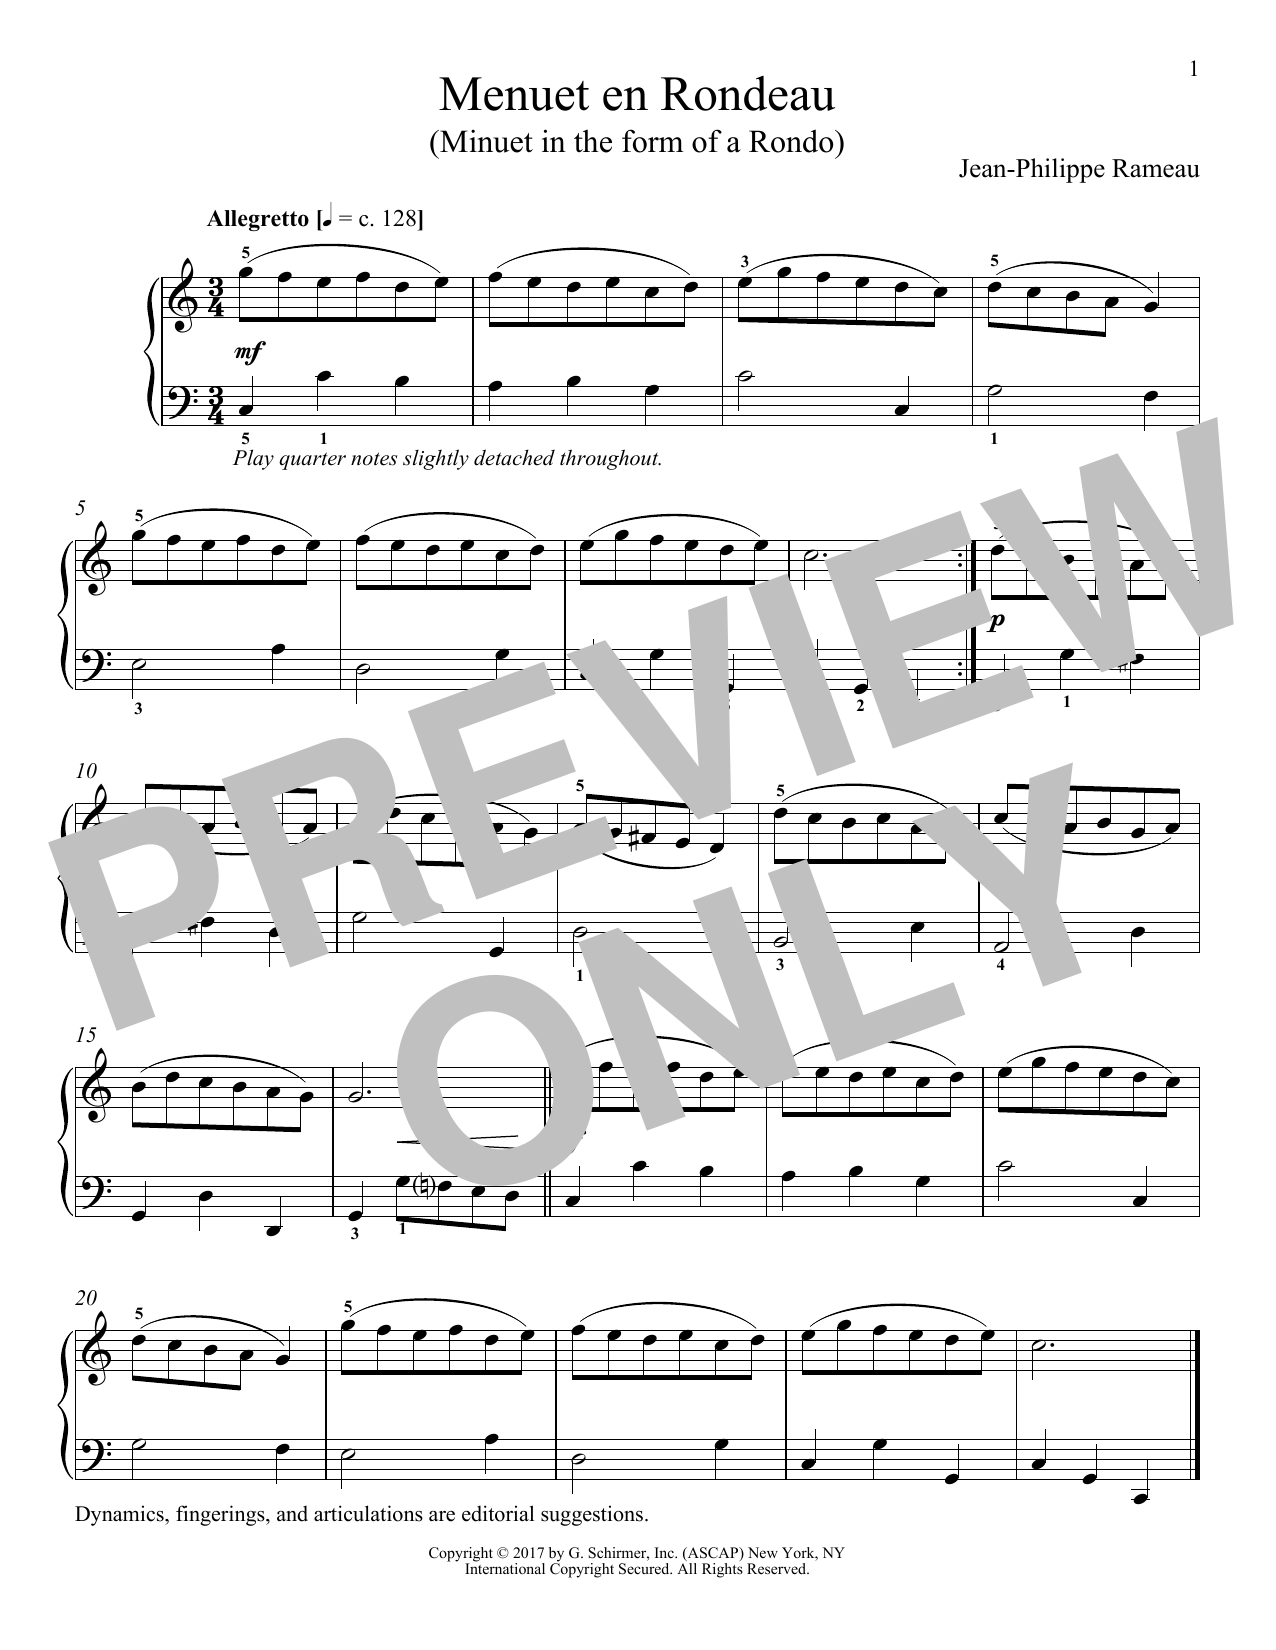 Jean-Phillip Rameau Menuet En Rondeau Sheet Music Notes & Chords for Piano - Download or Print PDF